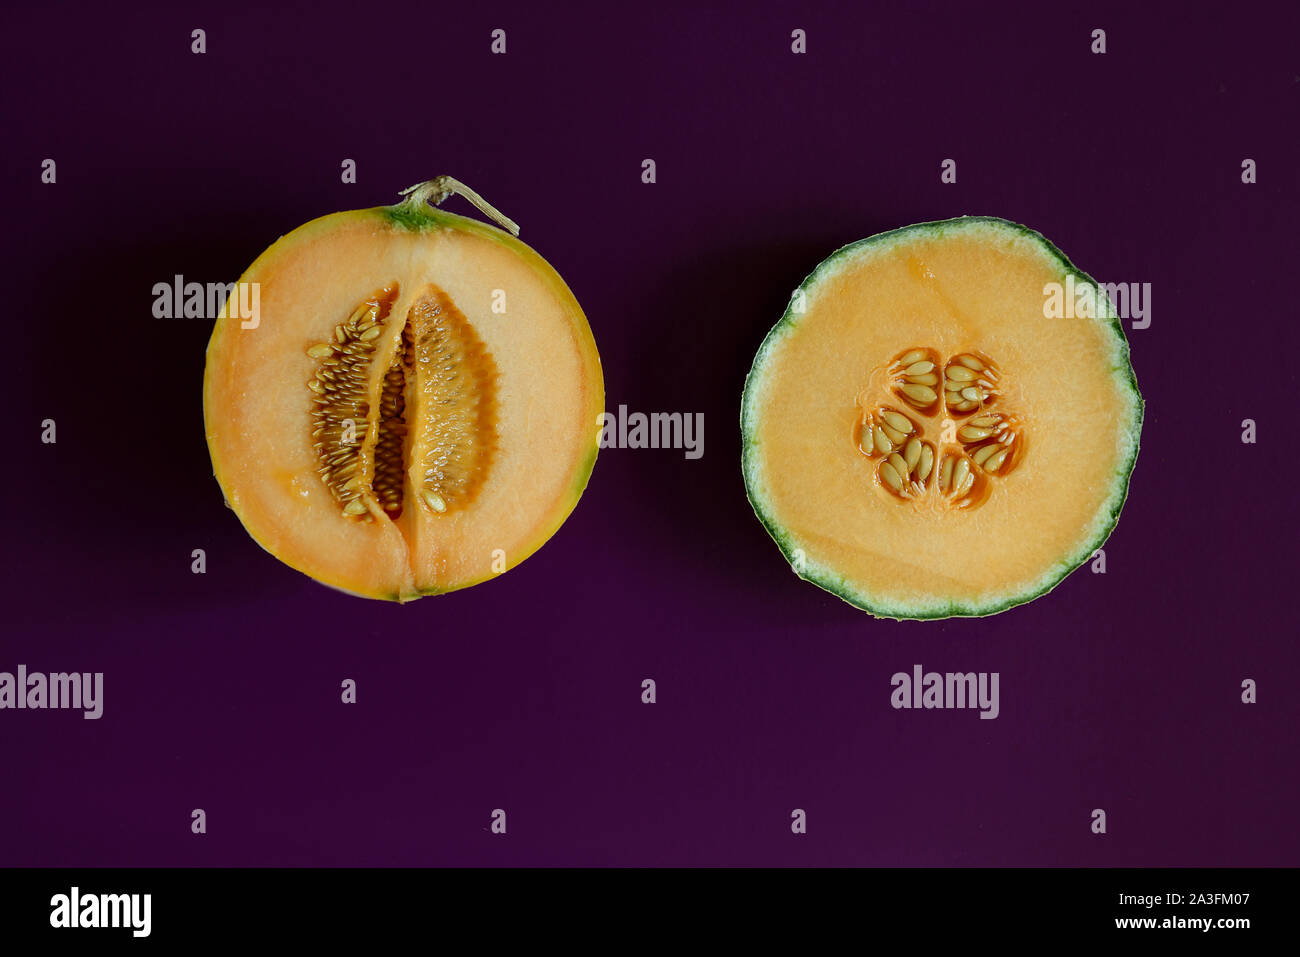 Two halves of cantaloupe melon on purple background Stock Photo